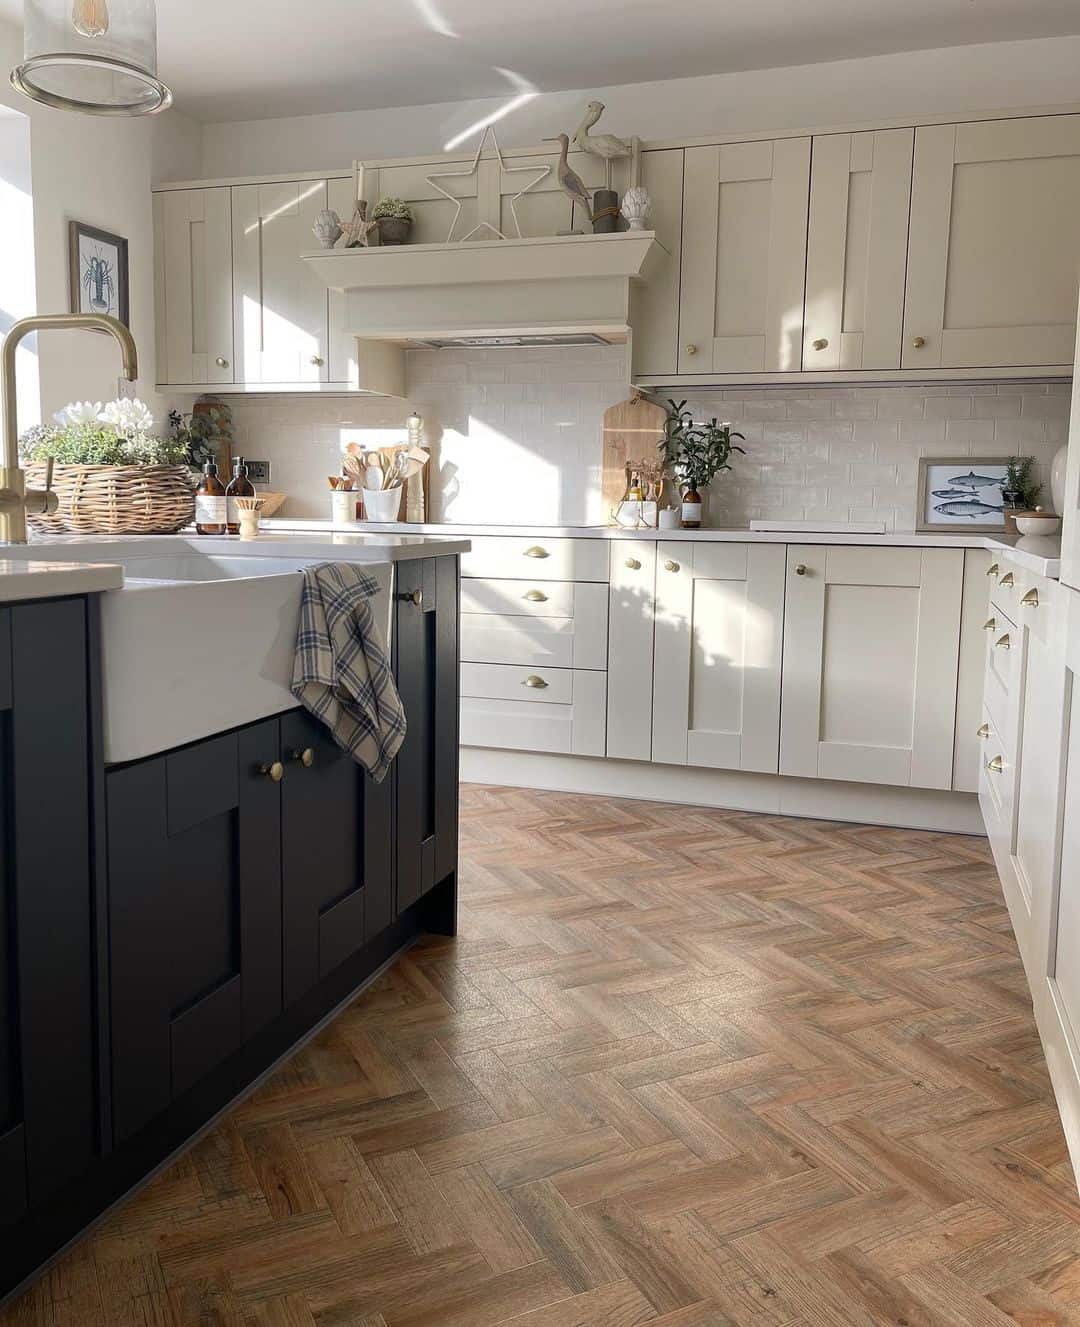 Two-toned Kitchen with Herringbone Flourish